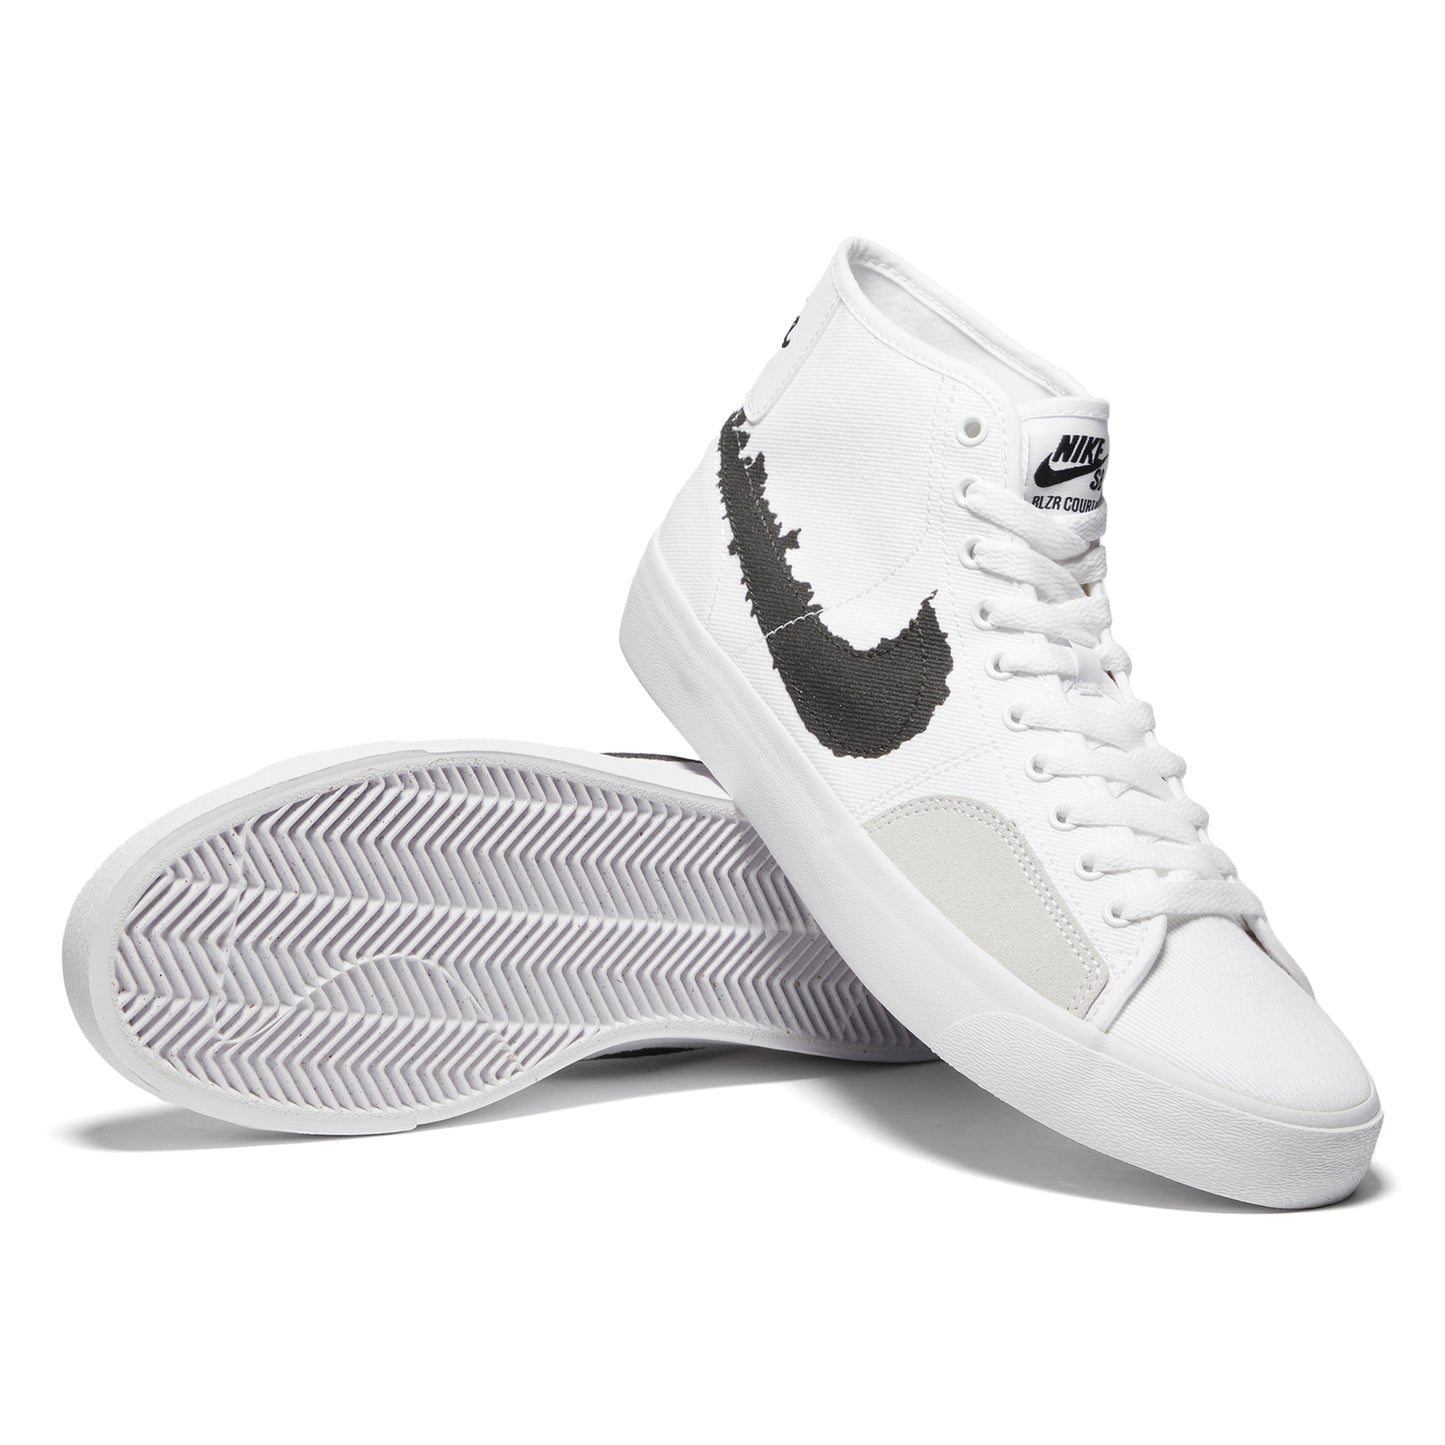 Nike SB Blazer Court Mid PRM (White/Black)